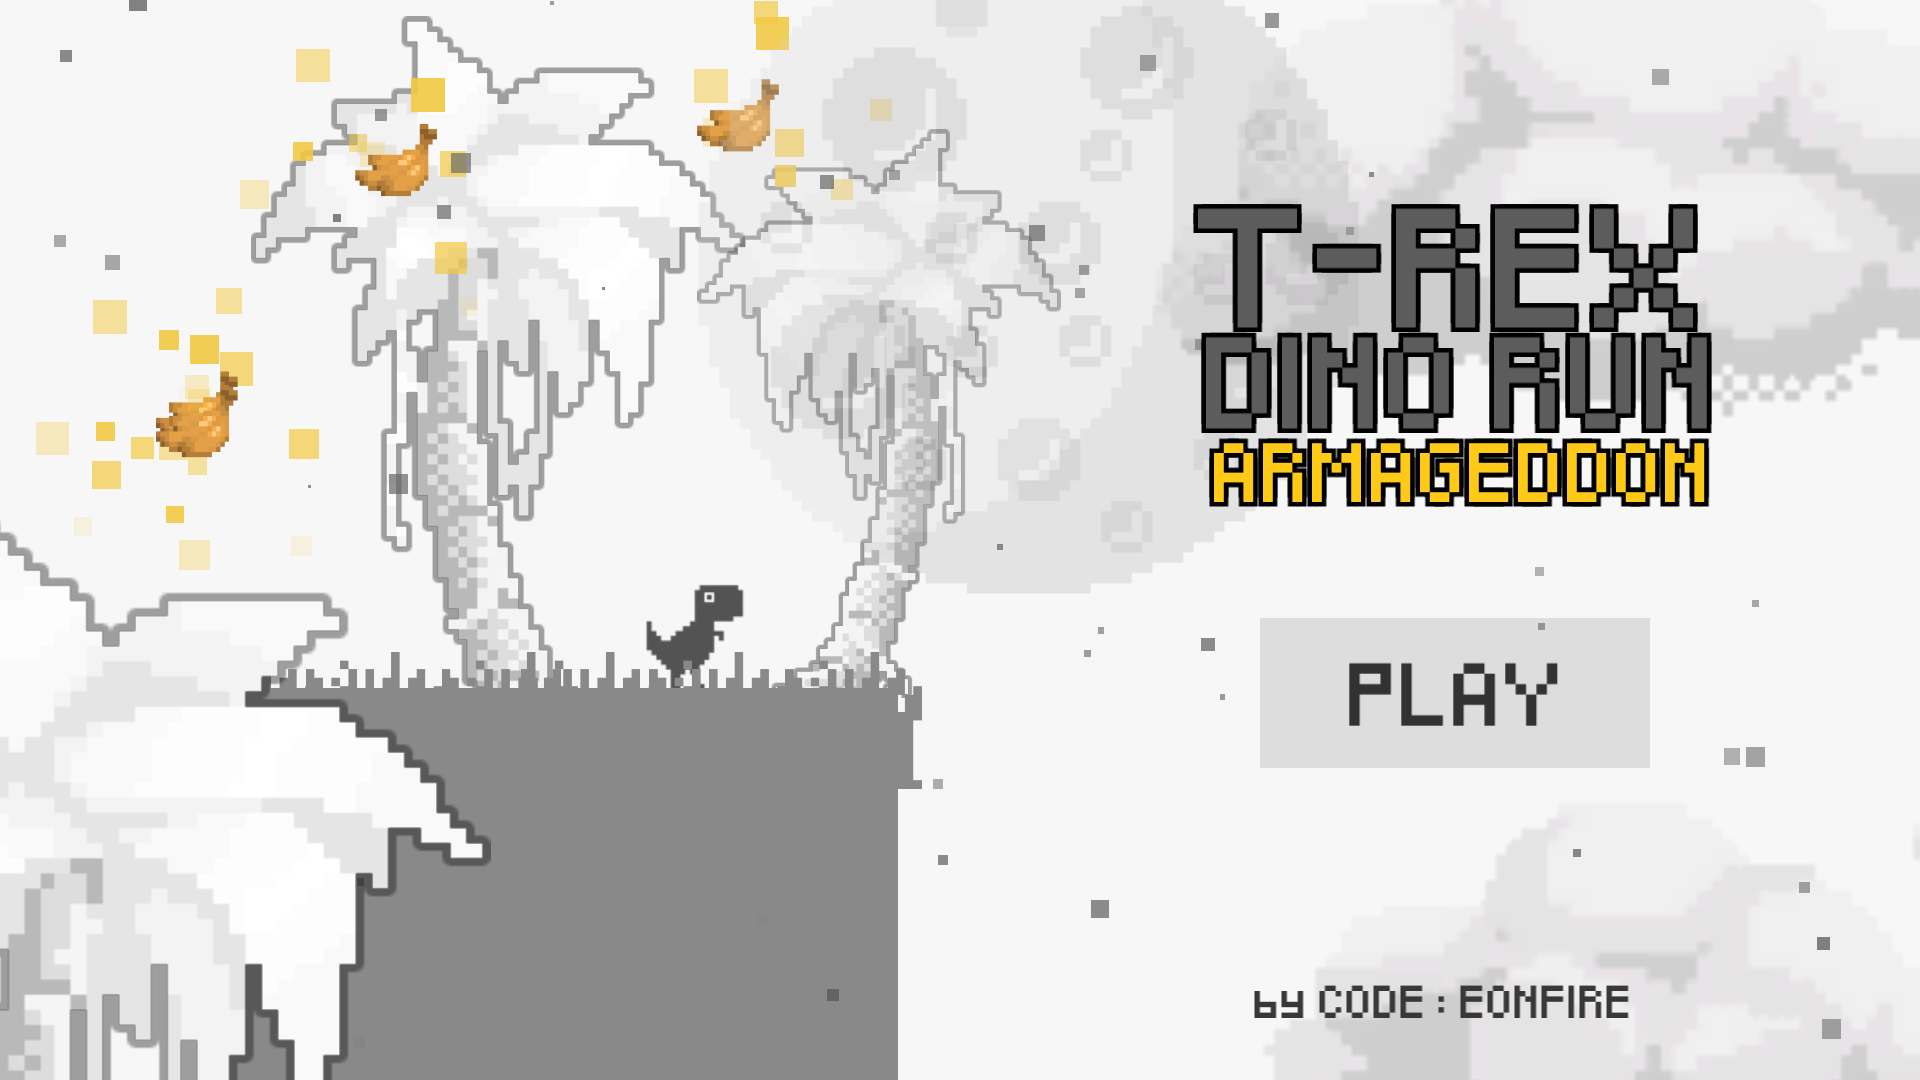 Dino Run 2 android iOS-TapTap